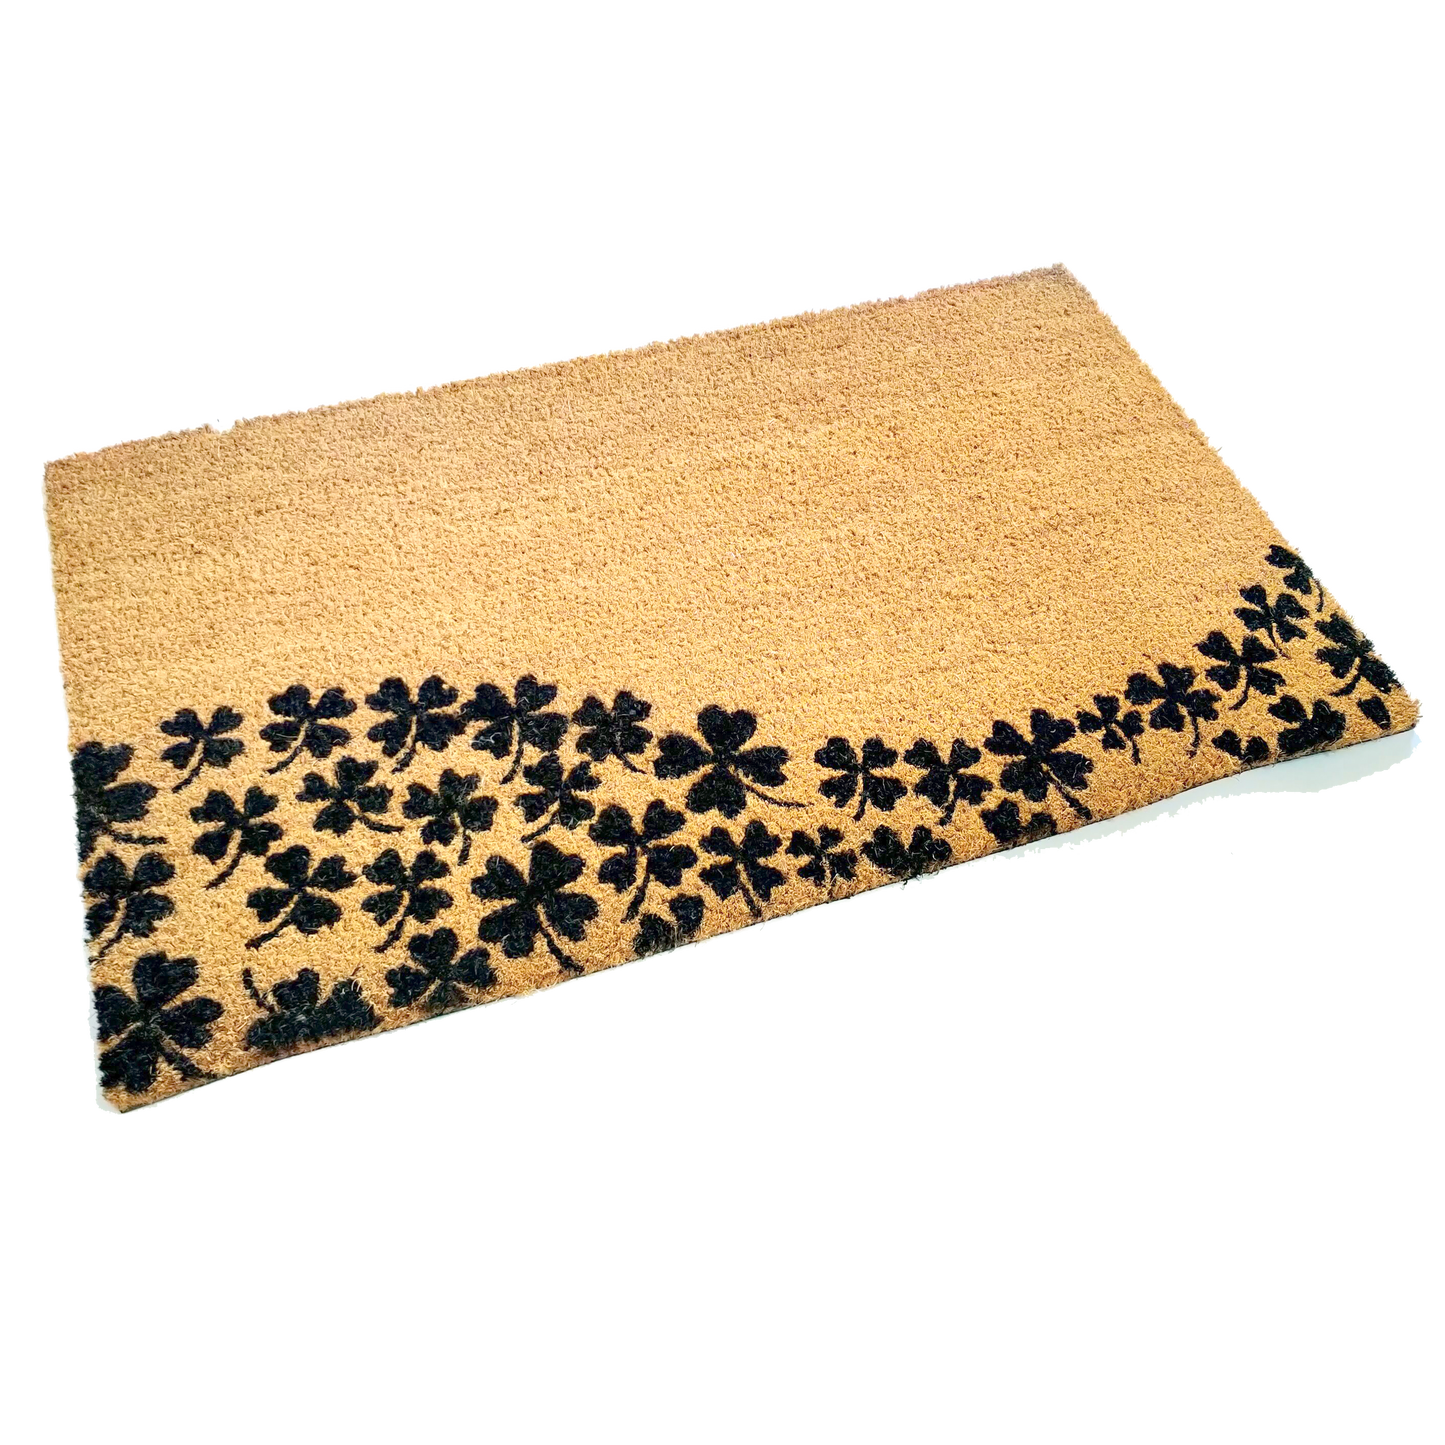 Four Leaf Clover Coir Door Mat with Wave Design | 75cm x 45cm | Durable, Slip-Resistant, and Eco-Friendly